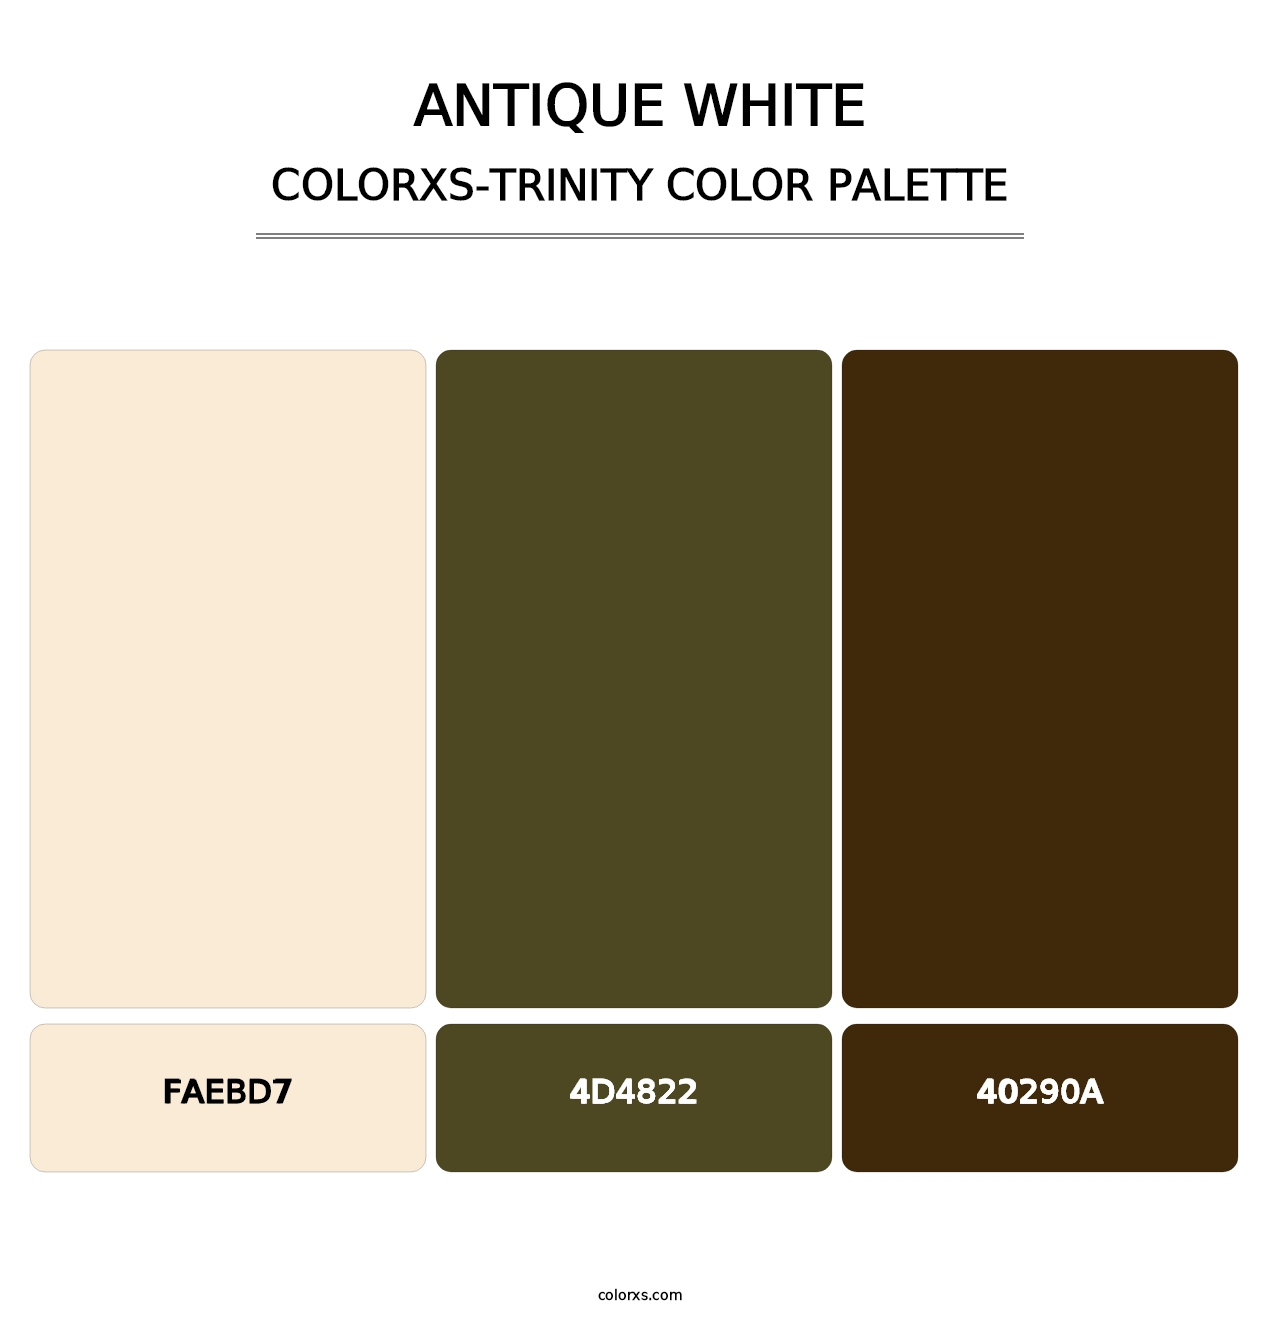 Antique White - Colorxs Trinity Palette